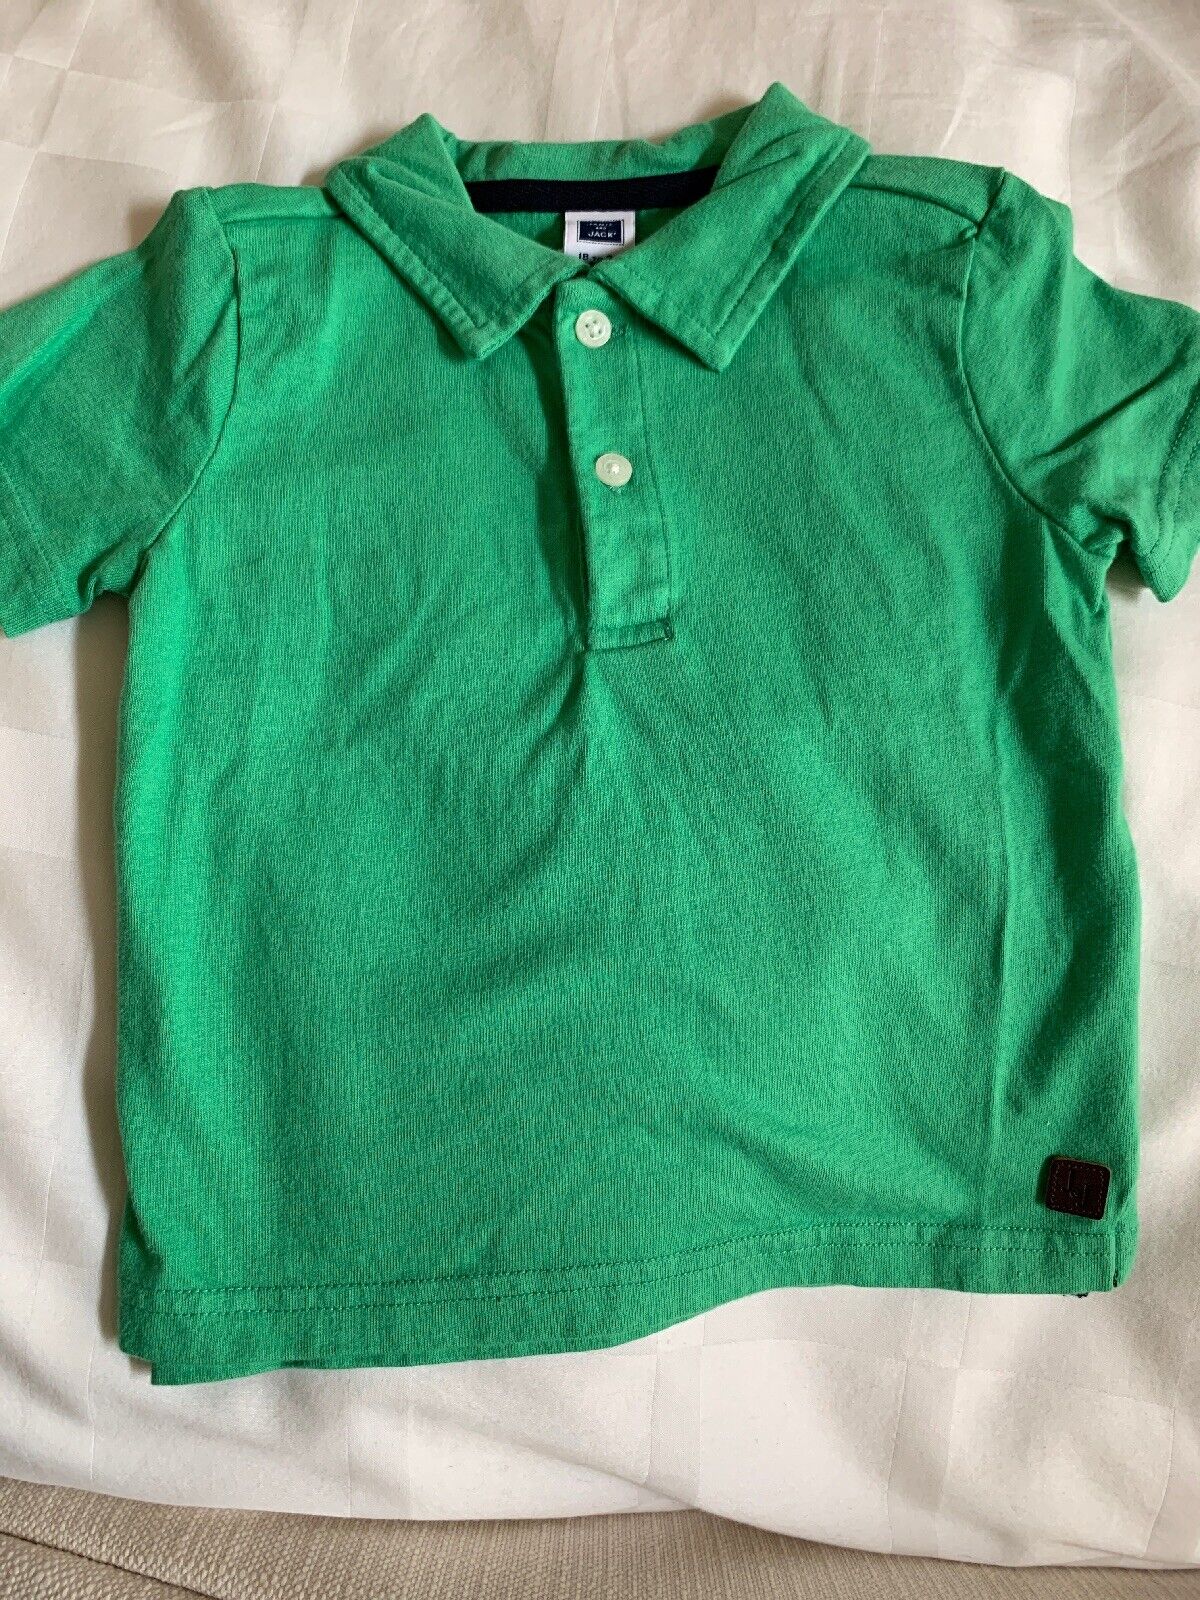 Boys JANIE trust JACK Max 42% OFF SS Cotton Shirt Polo Green 18-24M